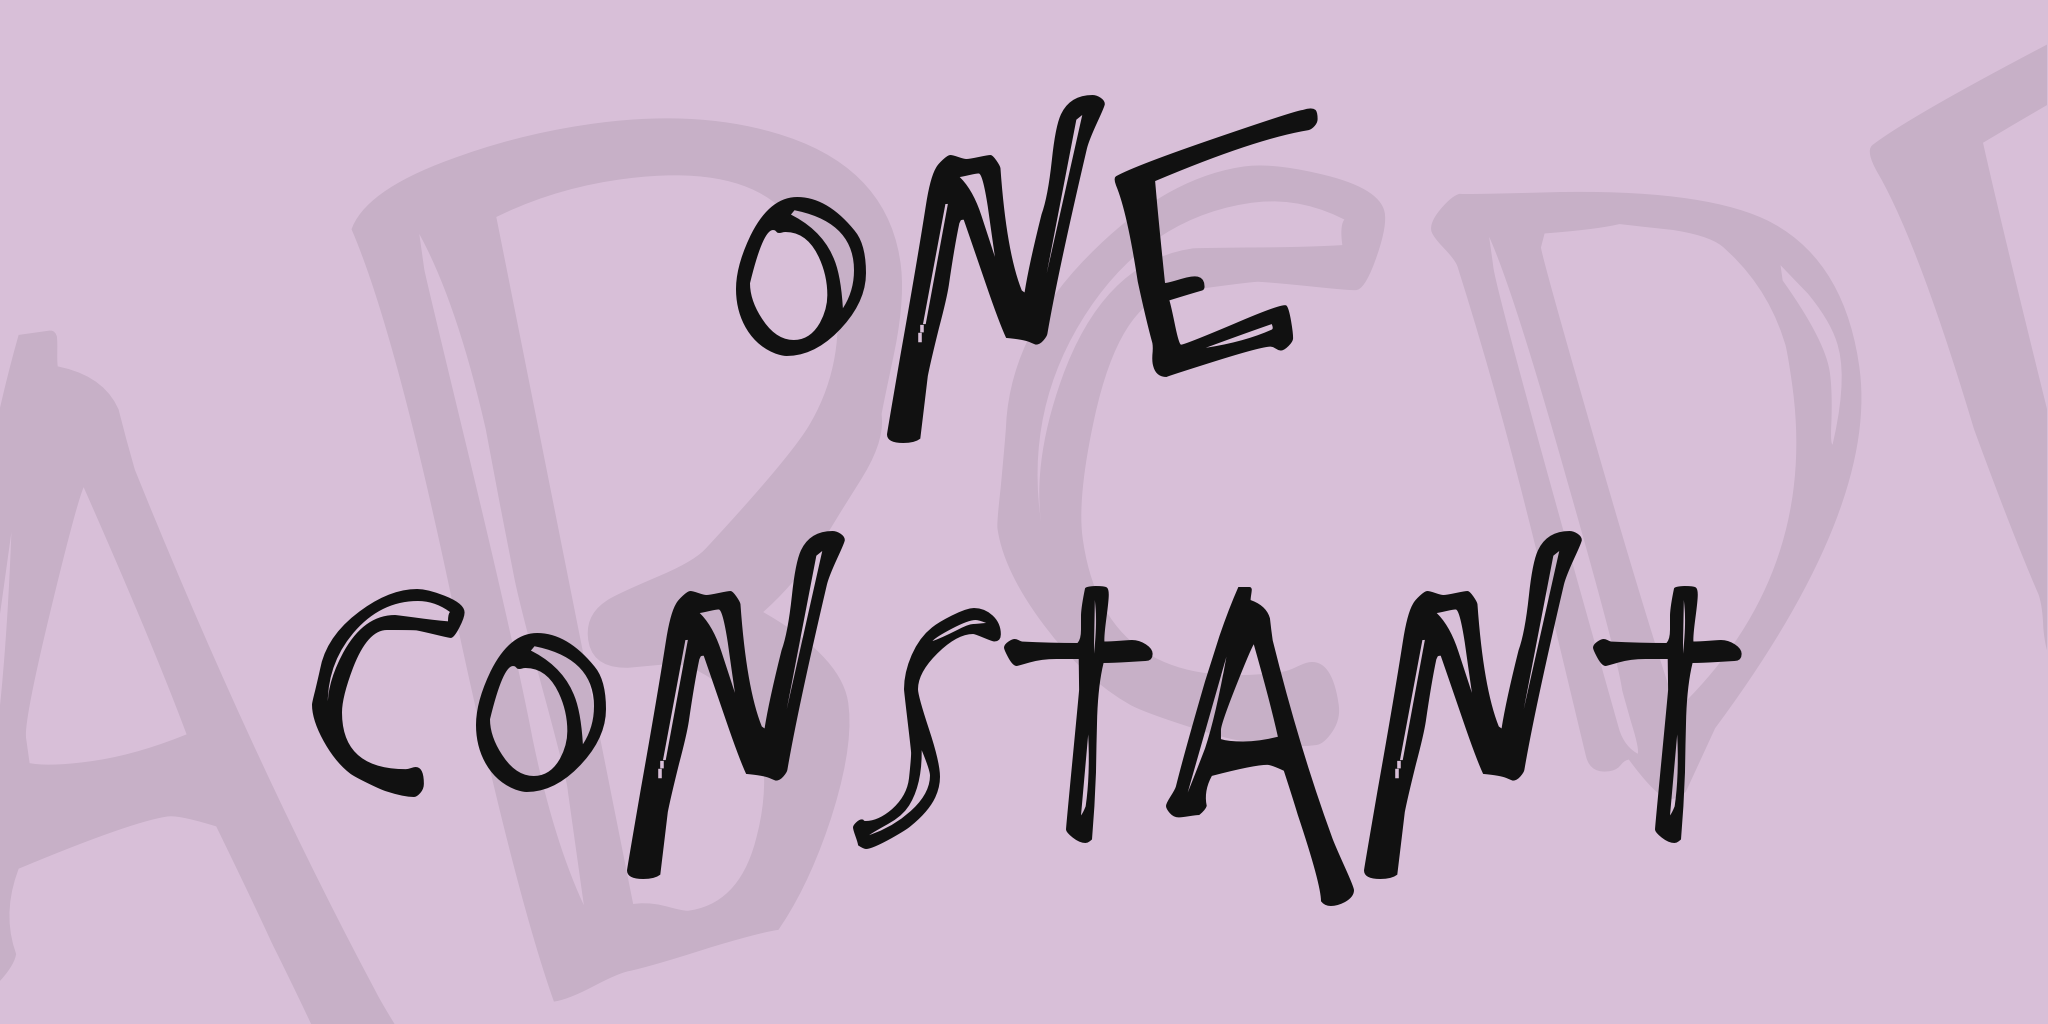 One Constant